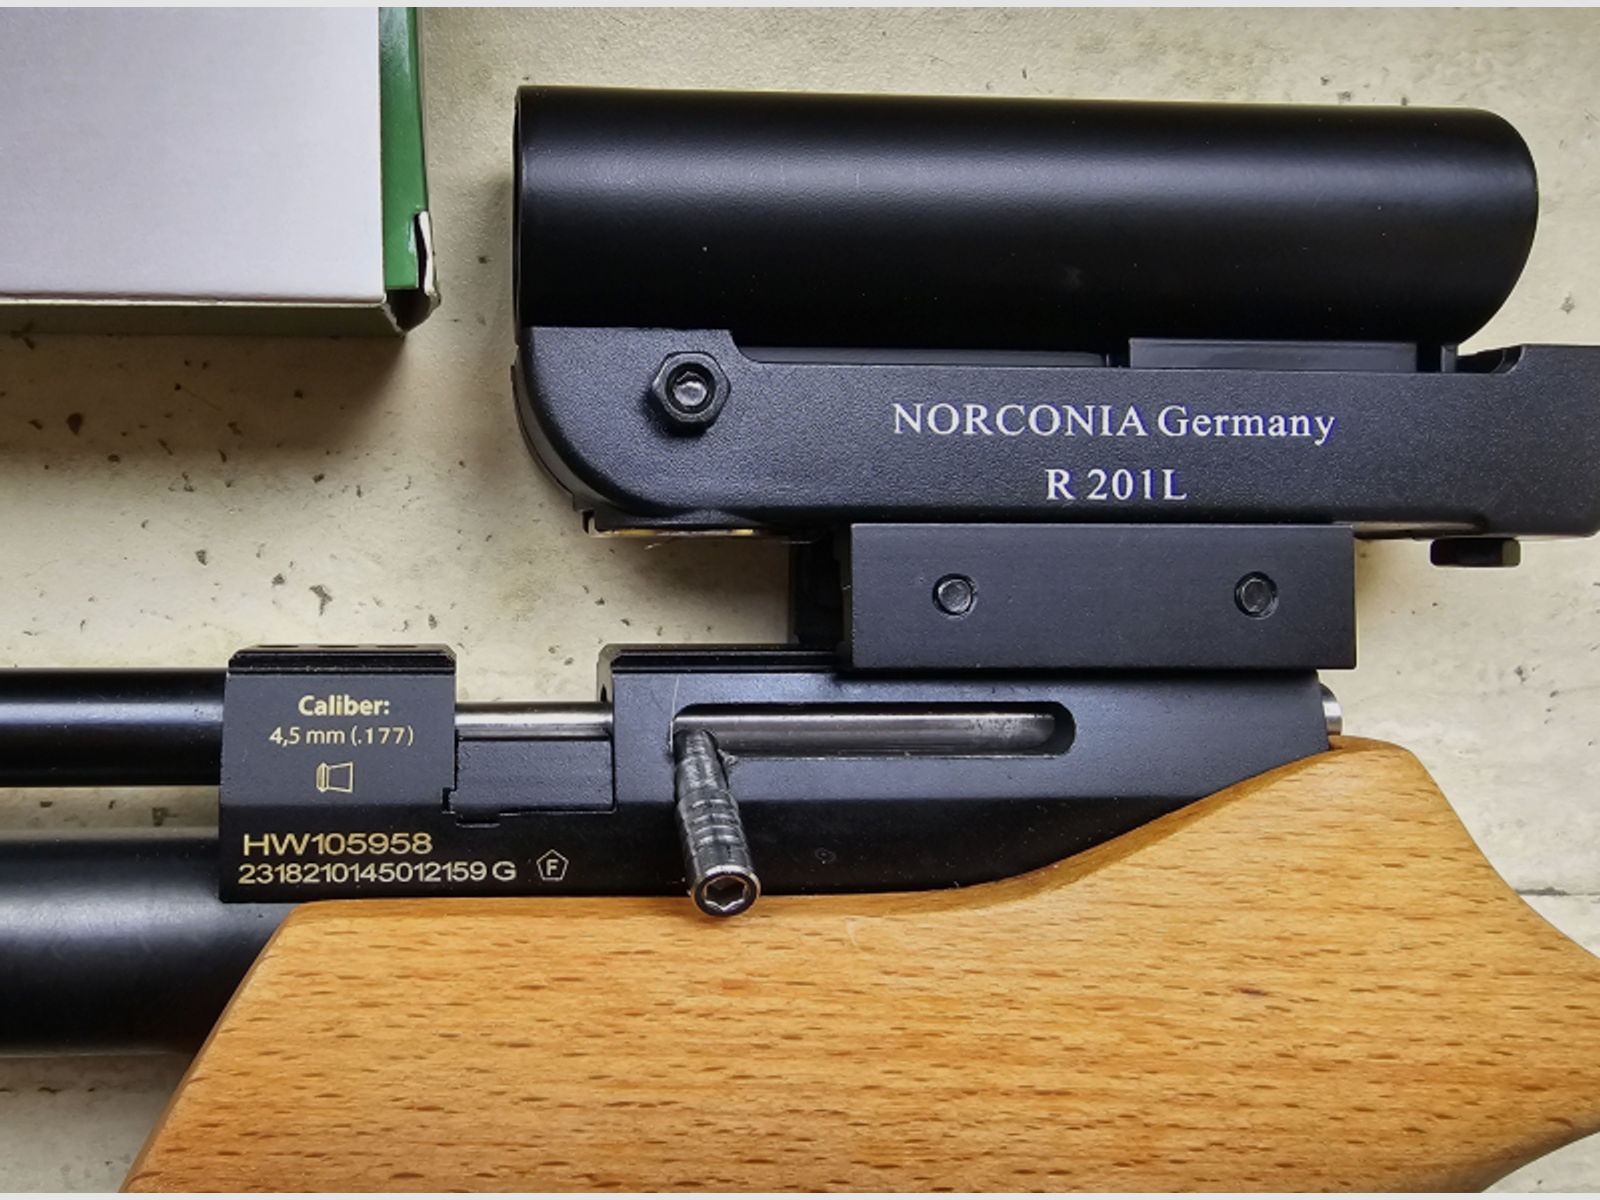 +++ Diana Bandit Pressluftpistole 4,5mm 177 mit Norkonia Reddot +++